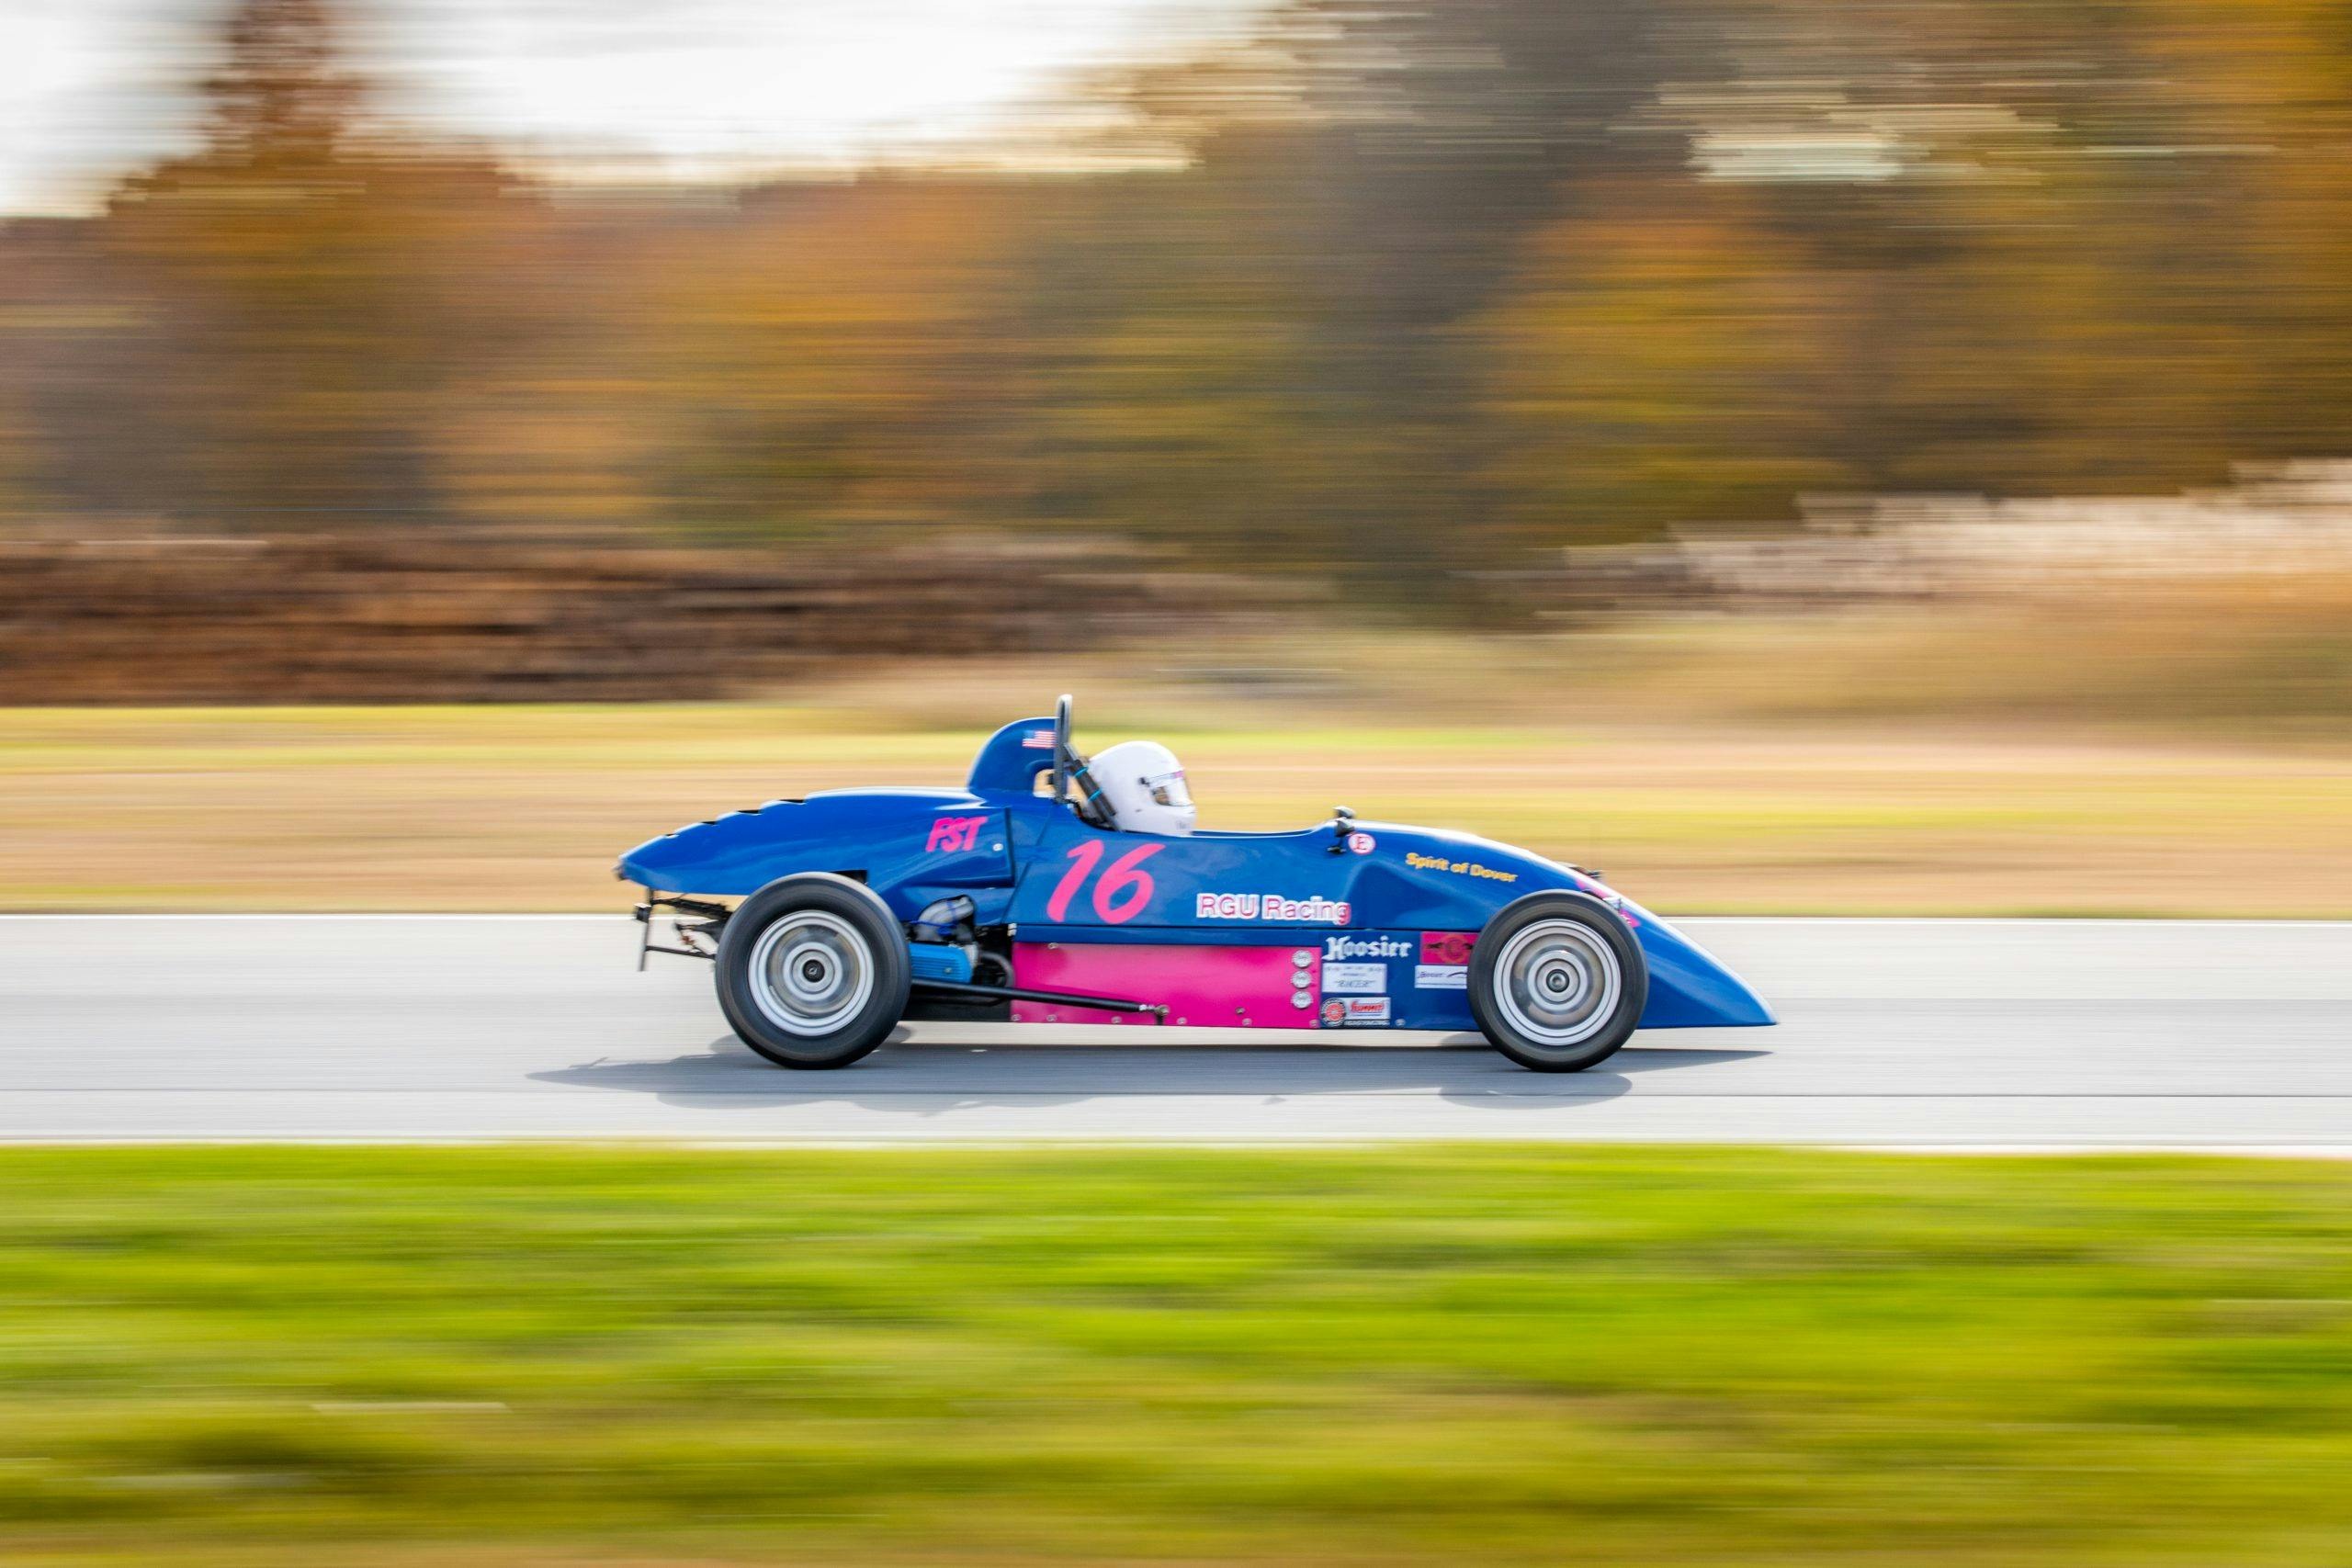 Formula First racecar dynamic action